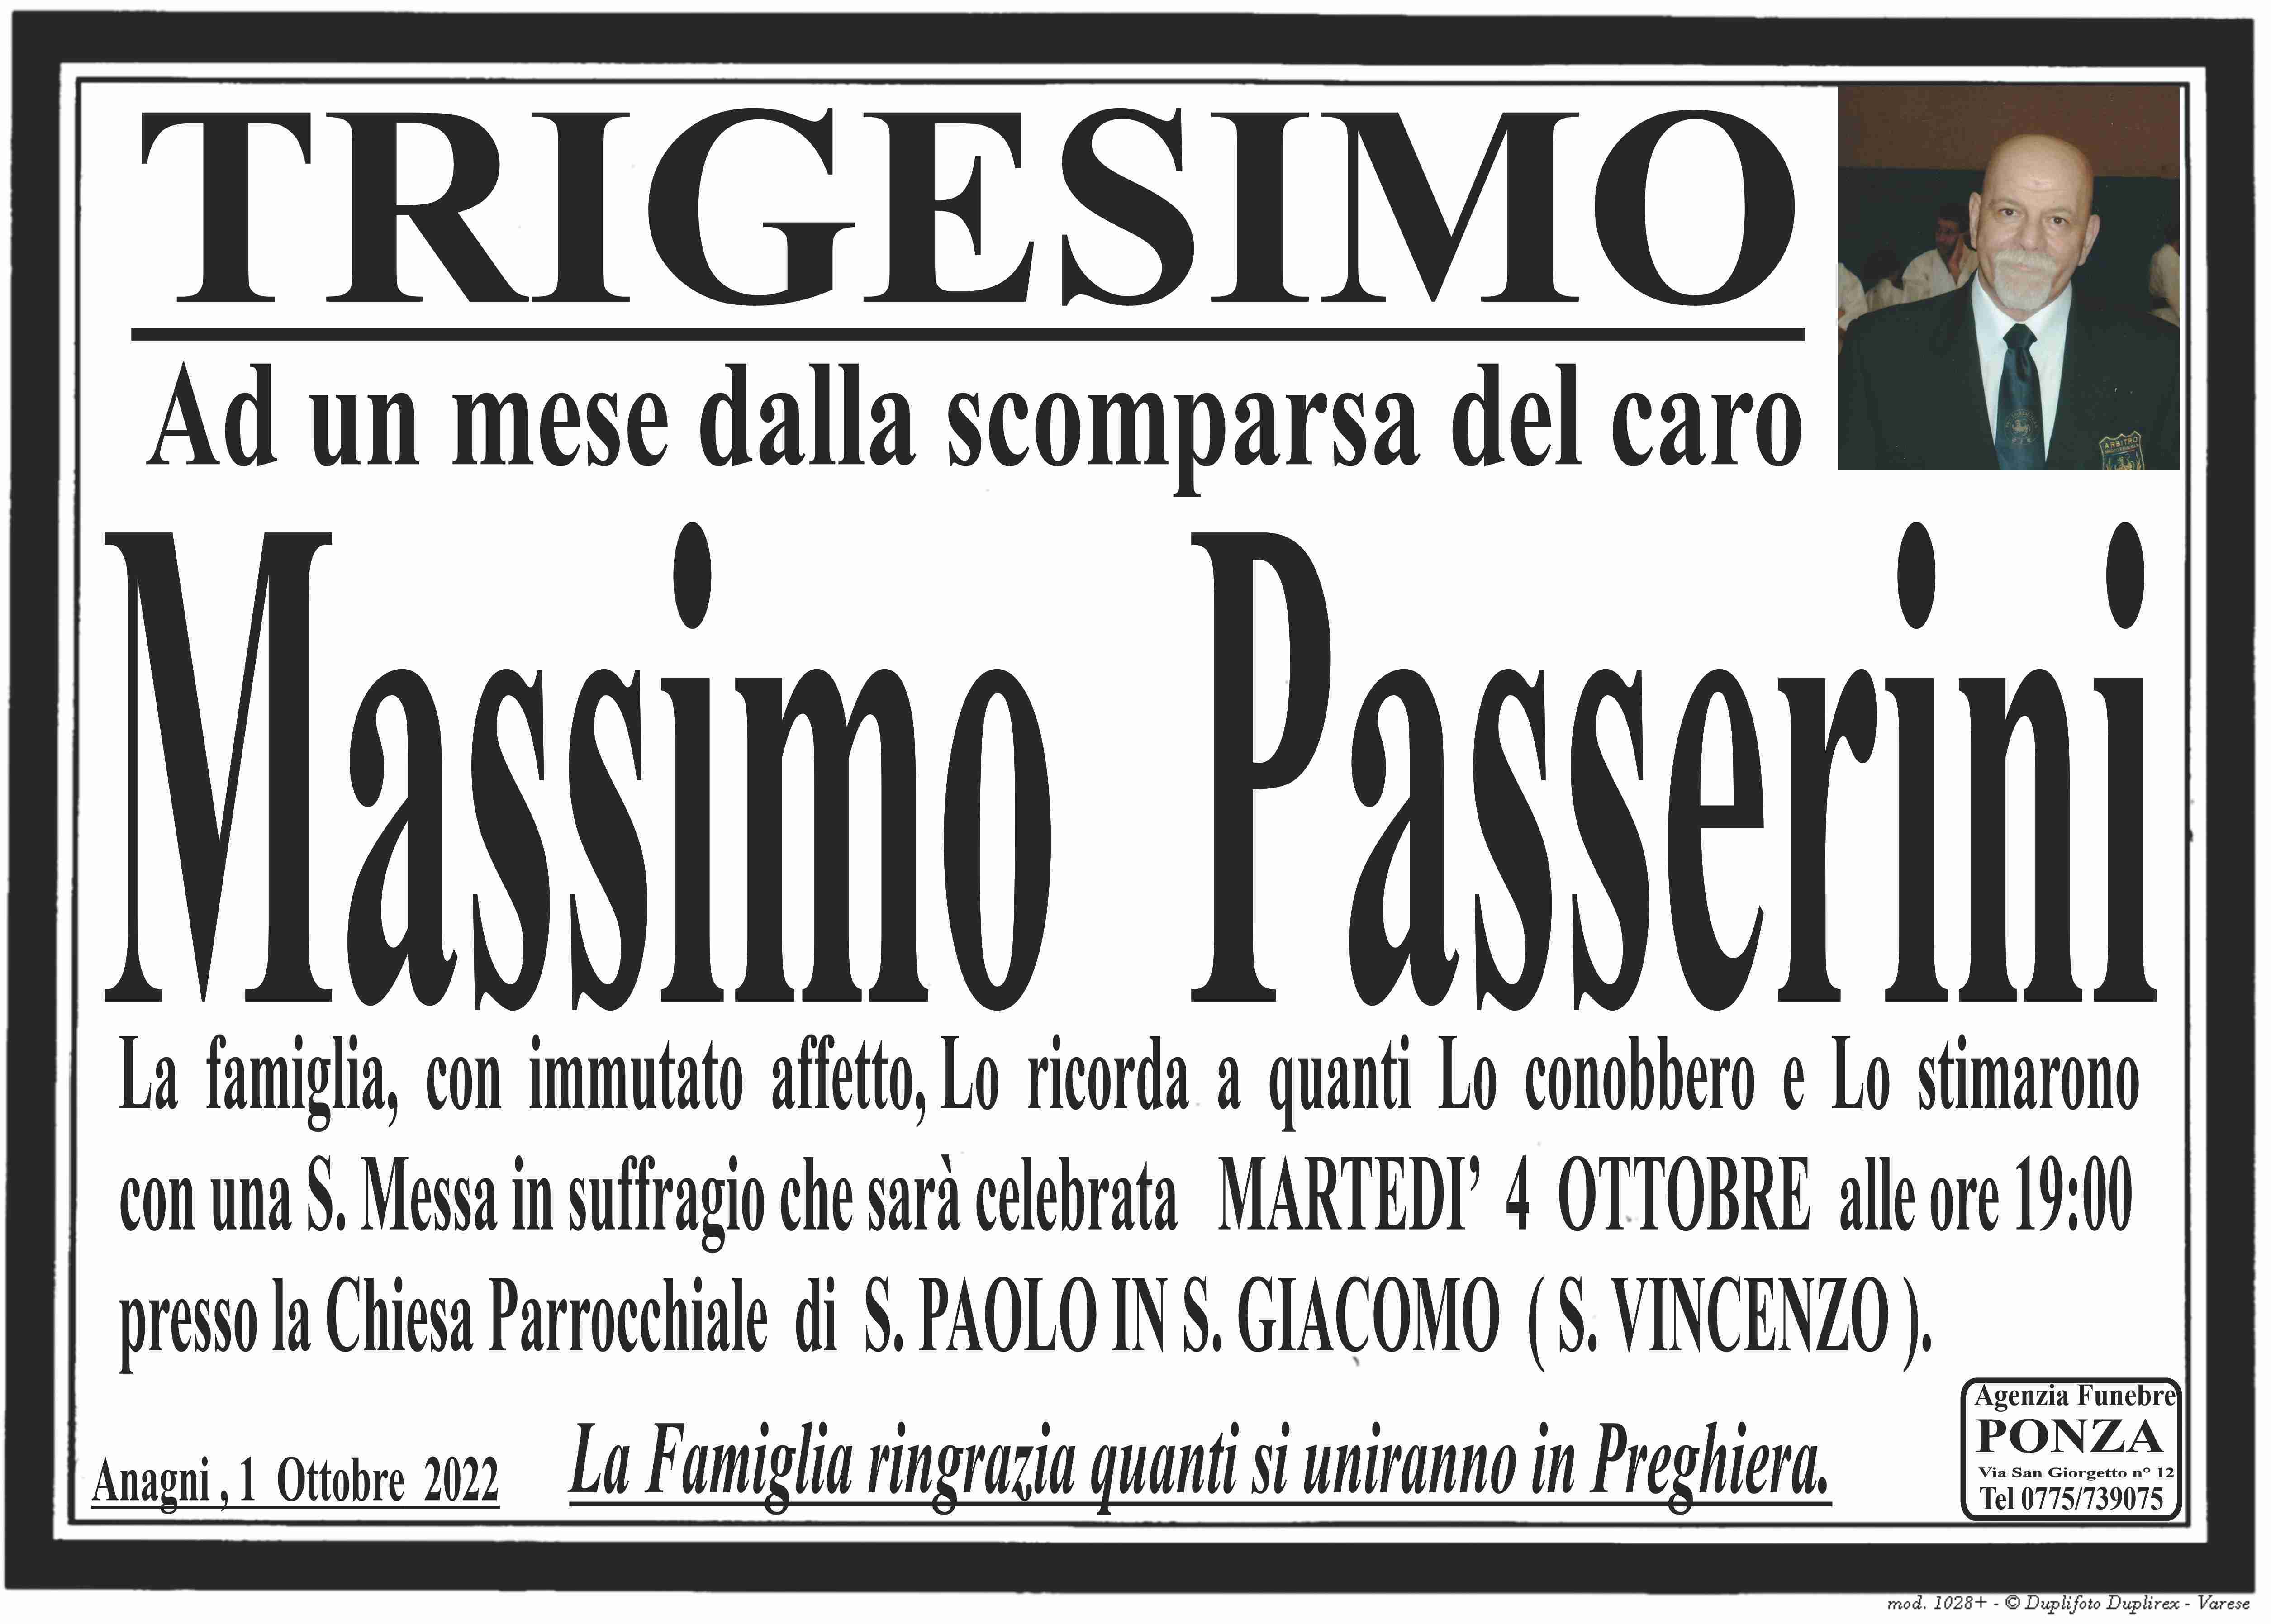 Massimo Passerini